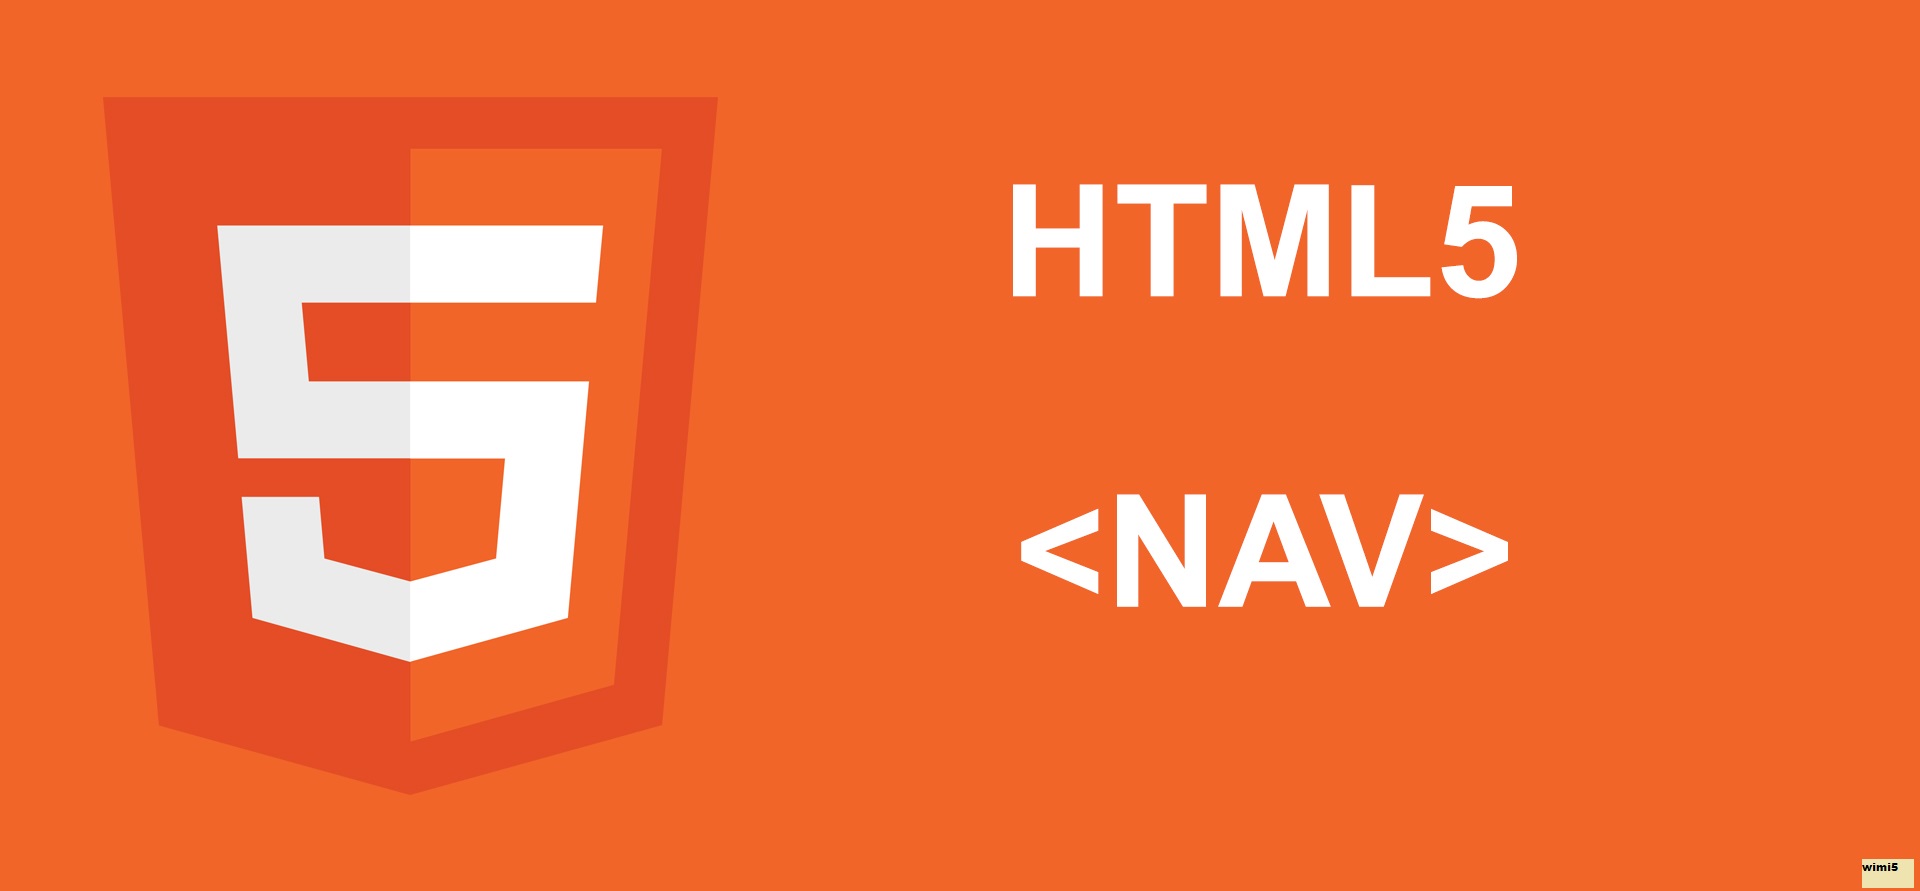 Belajar HTML5 Elemen Navigasi HTML5